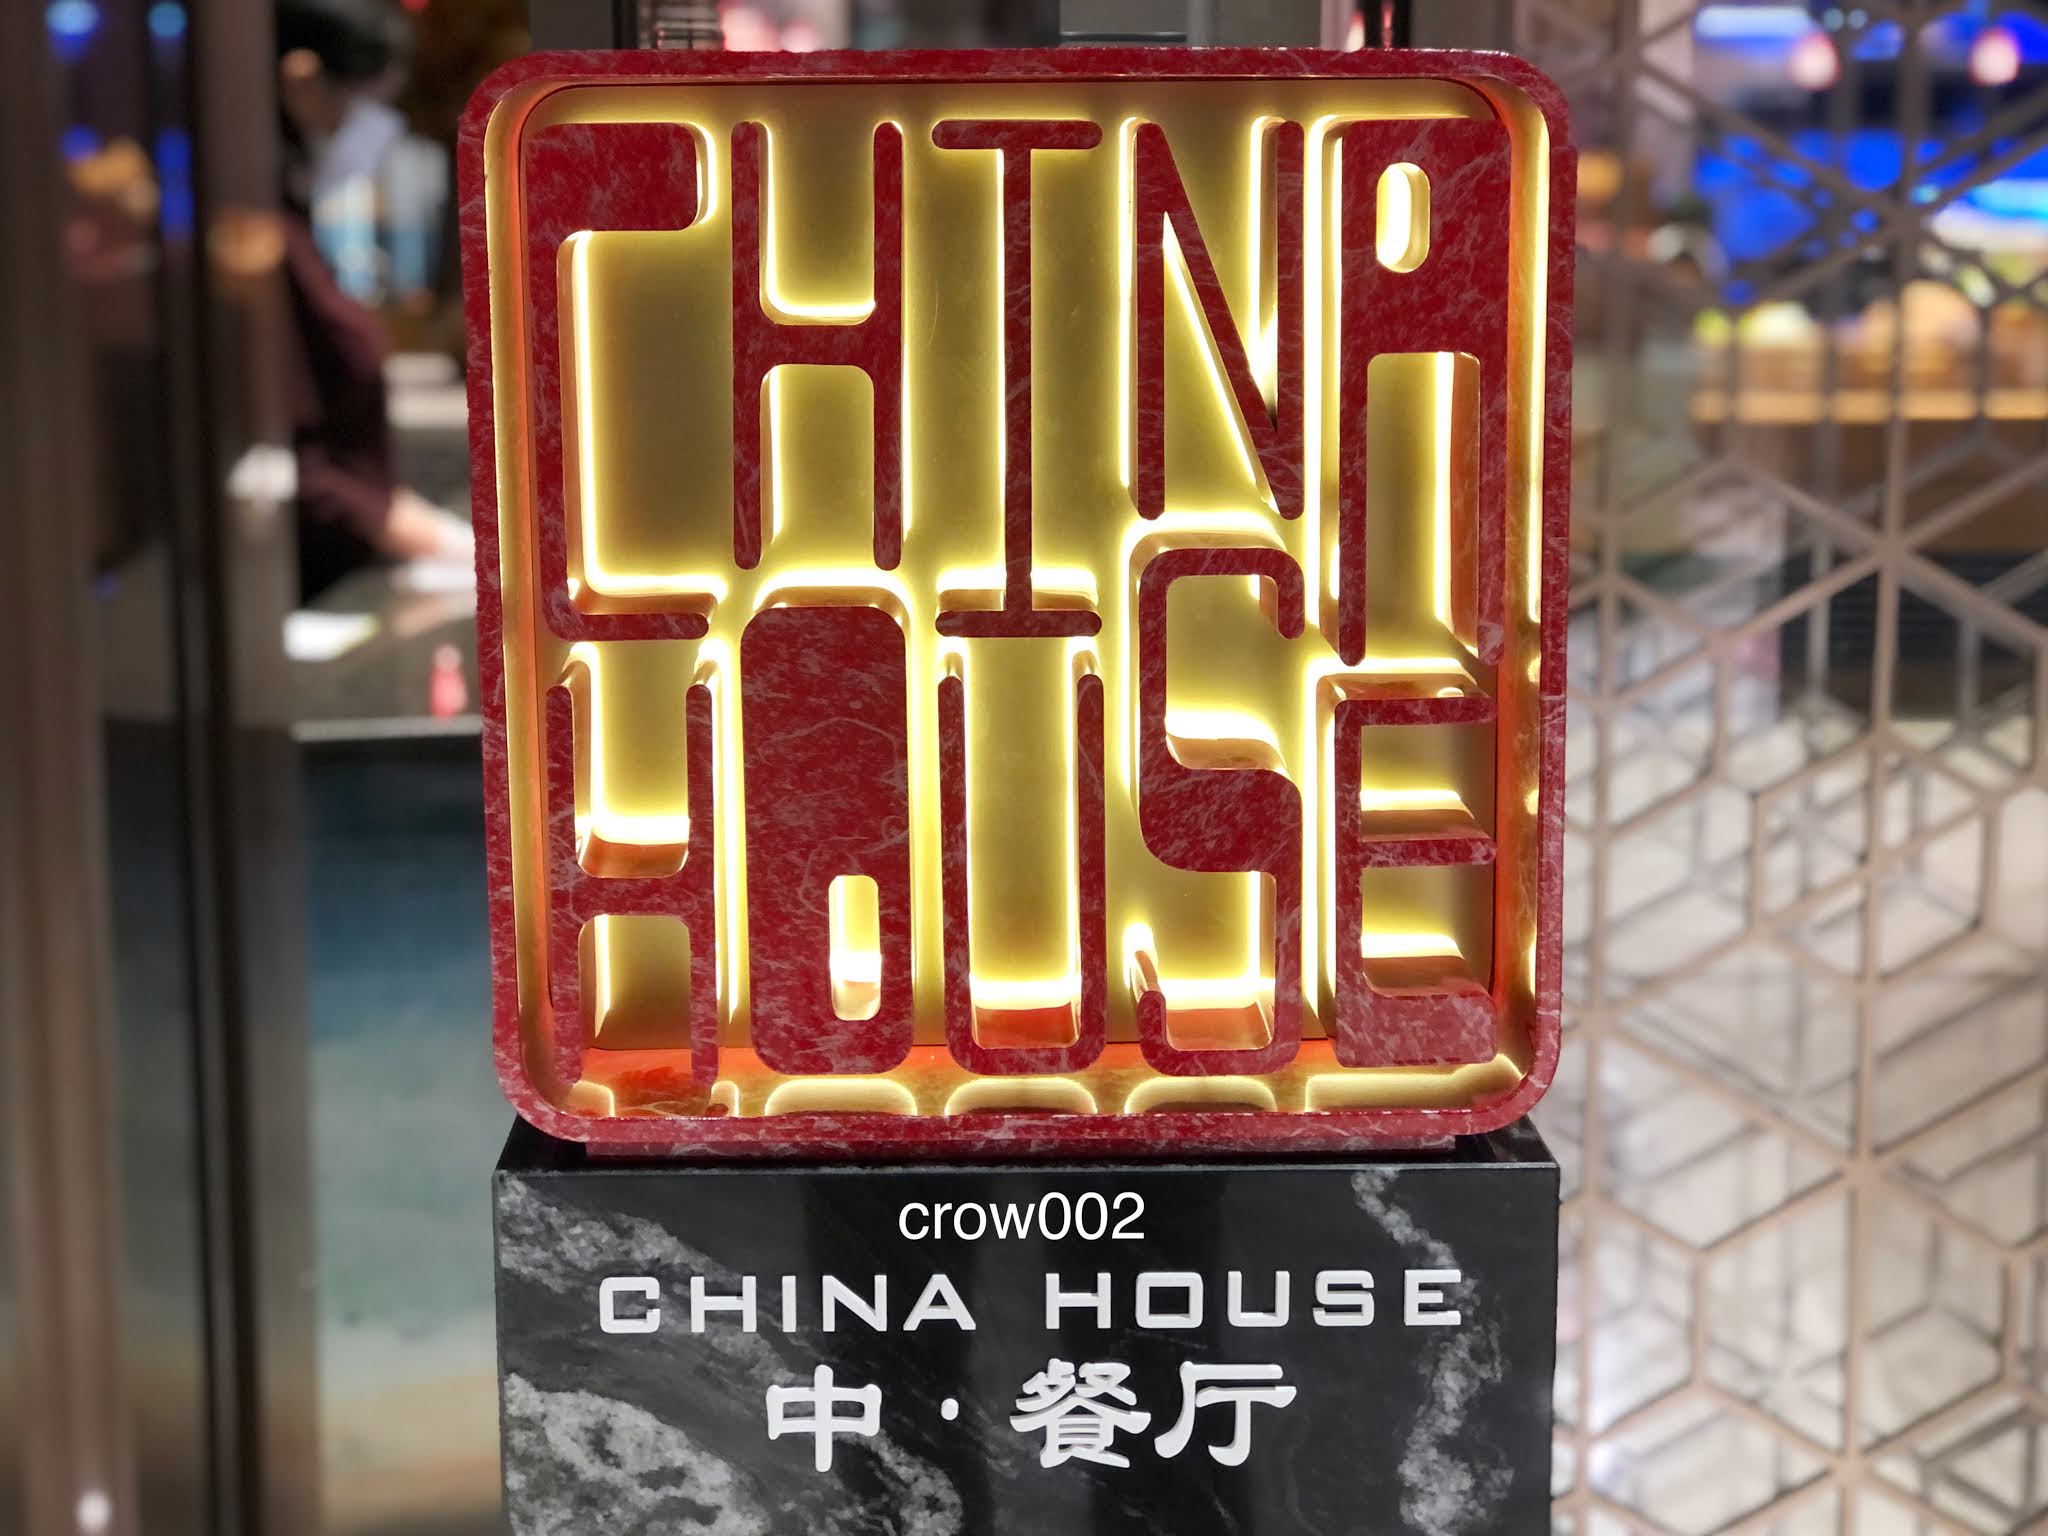 CHINA HOUSE at GRAND HYATT JEJU DREAM TOWER  - 그랜드 하얏트 제주 드림 타워 차이나 하우스 2020년 12월